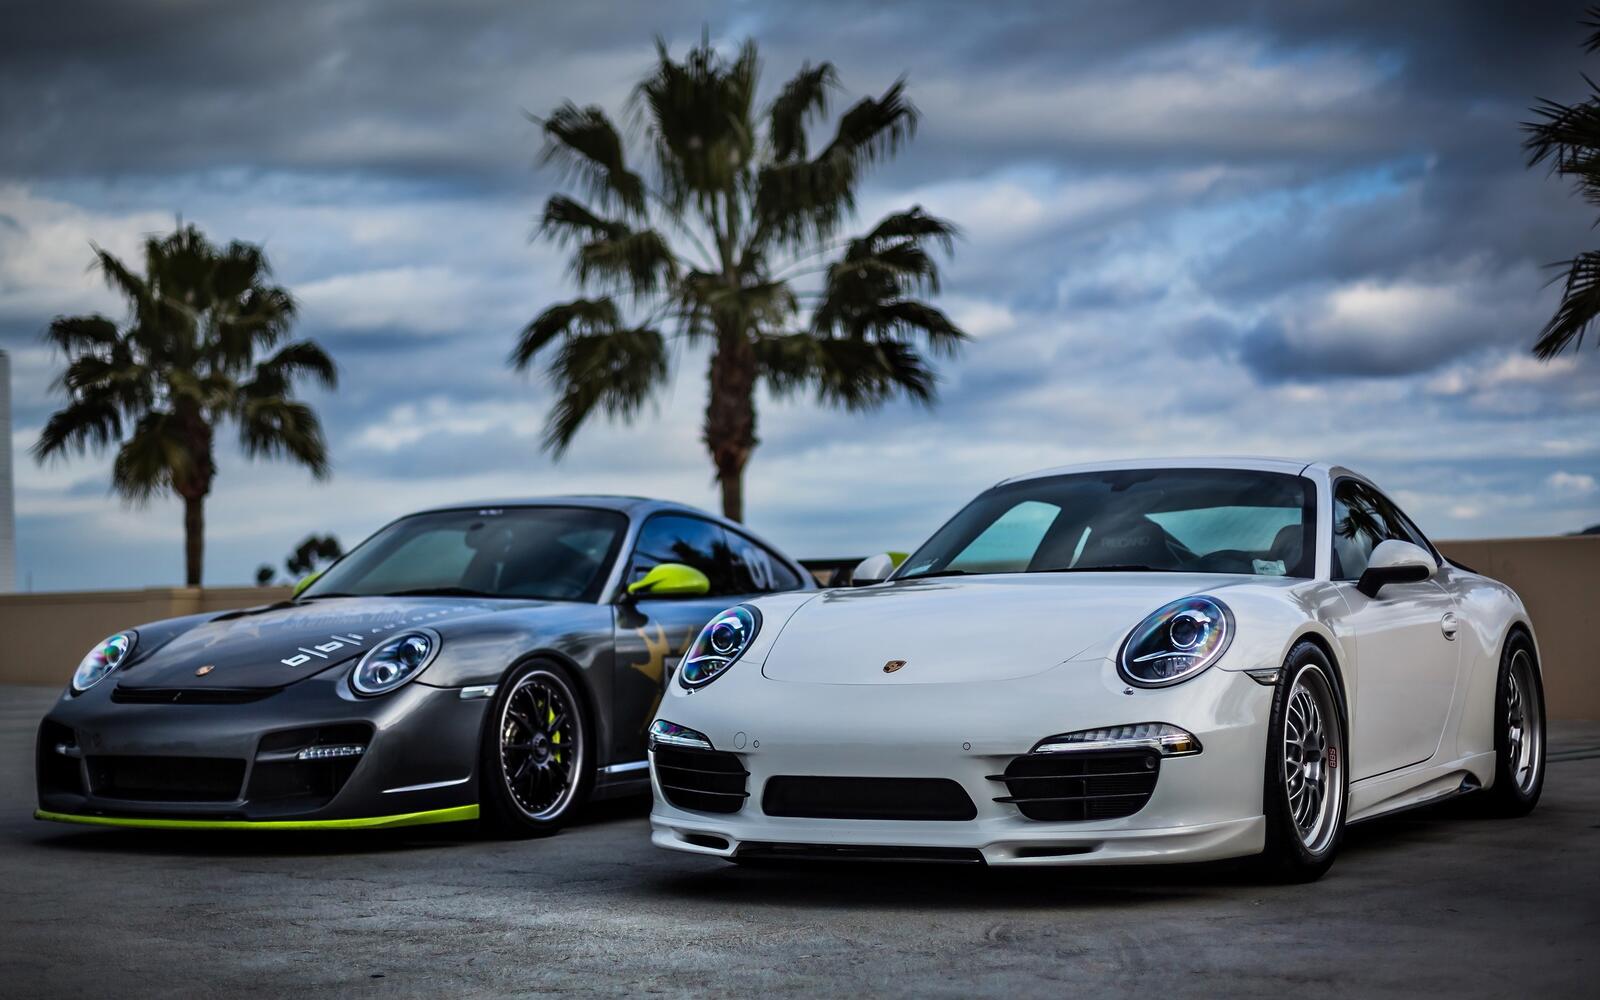 Free photo White and black Porsche sports near palm trees